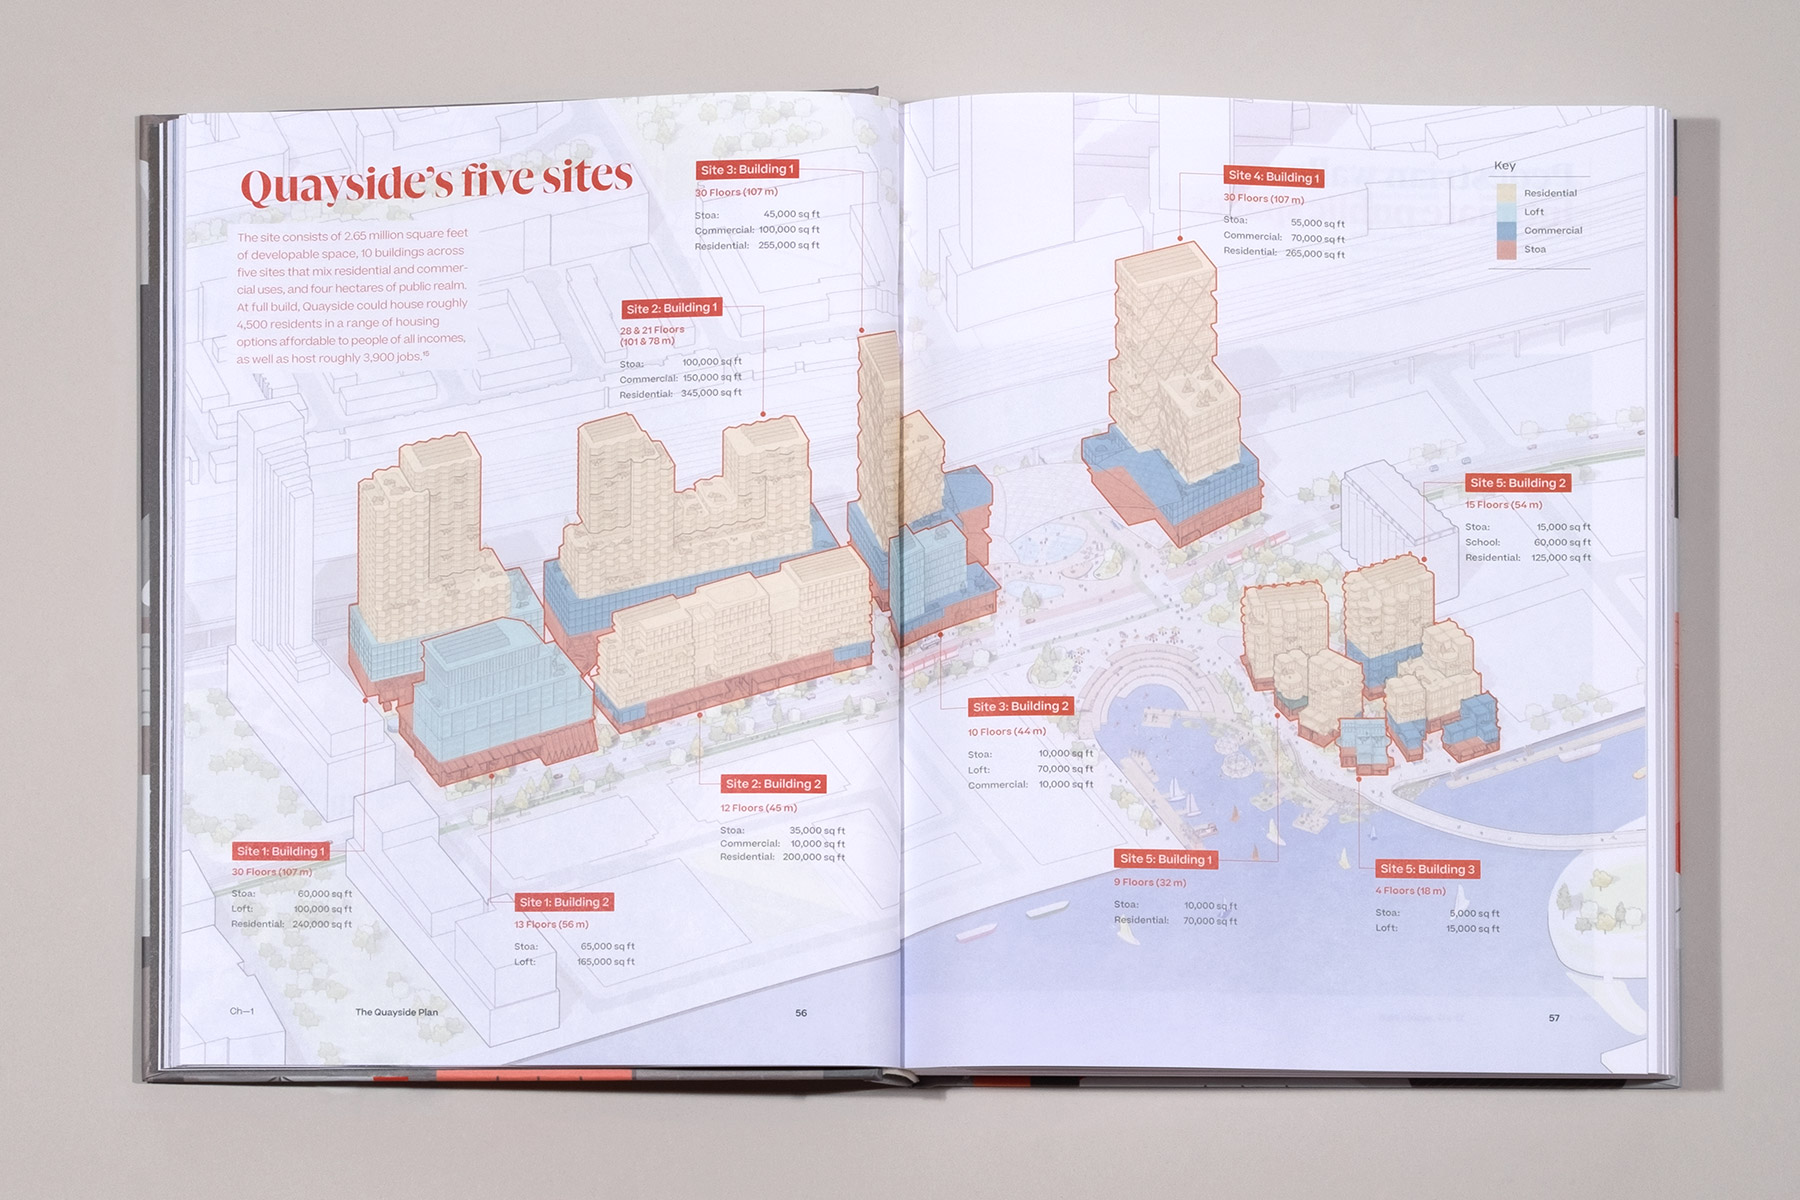 Sidewalk Labs’ Toronto Tomorrow master plan